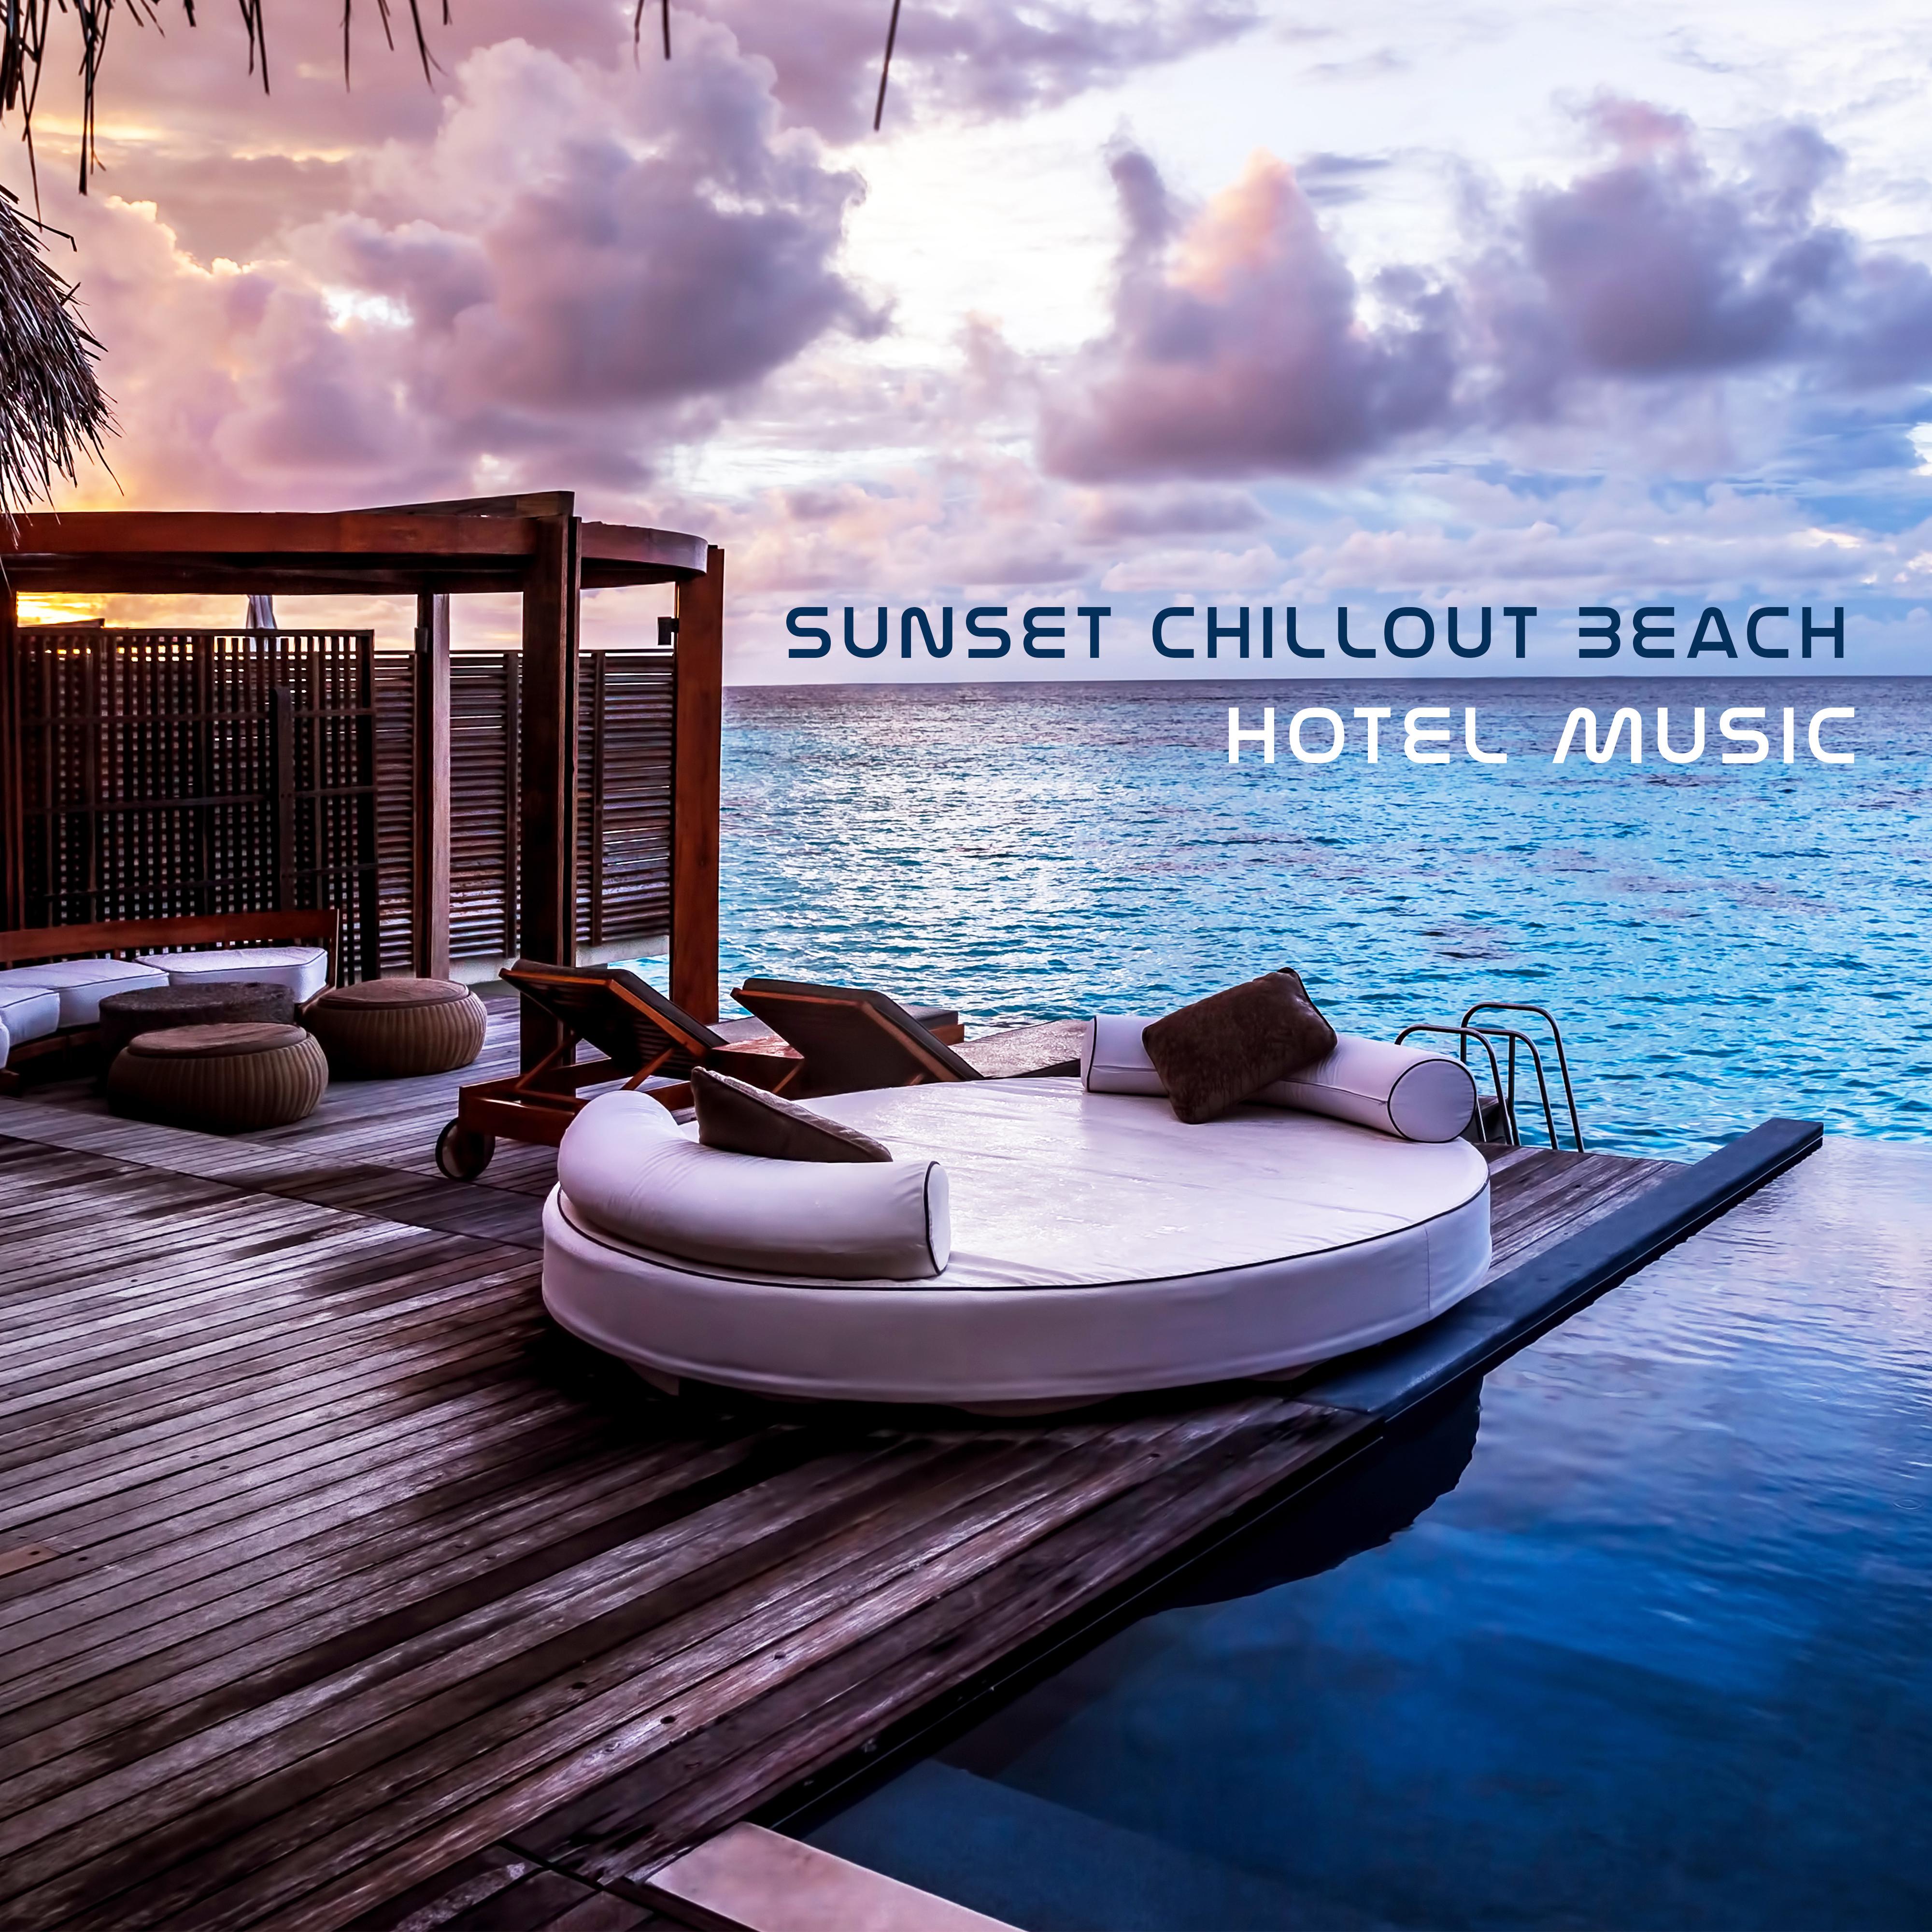 Sunset Chillout Beach Hotel Music